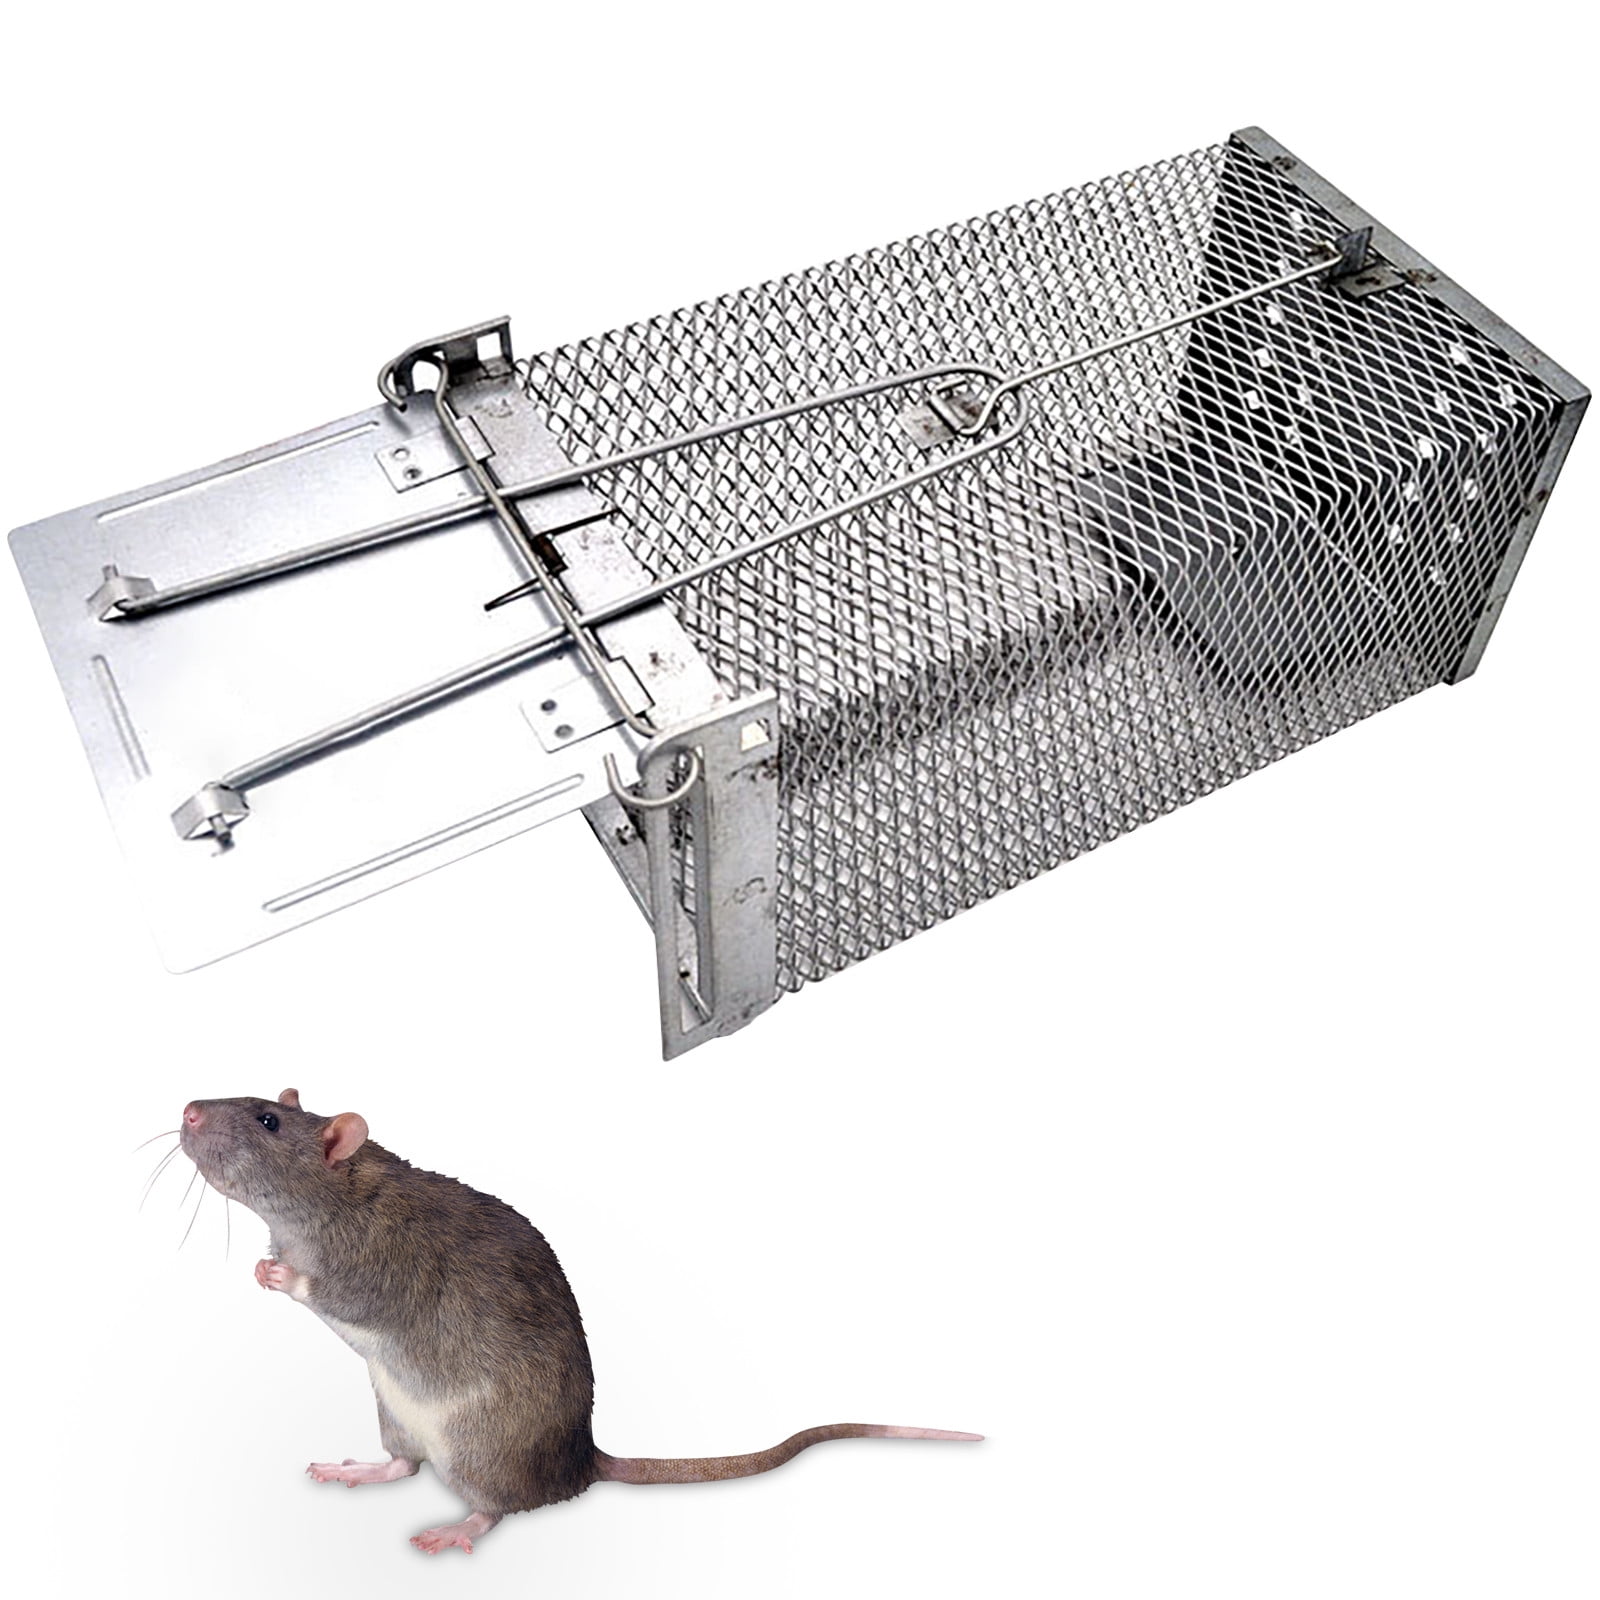 Box Trap for Mice-LIFE FISHING 12 x 5 x 5 cm 70443 